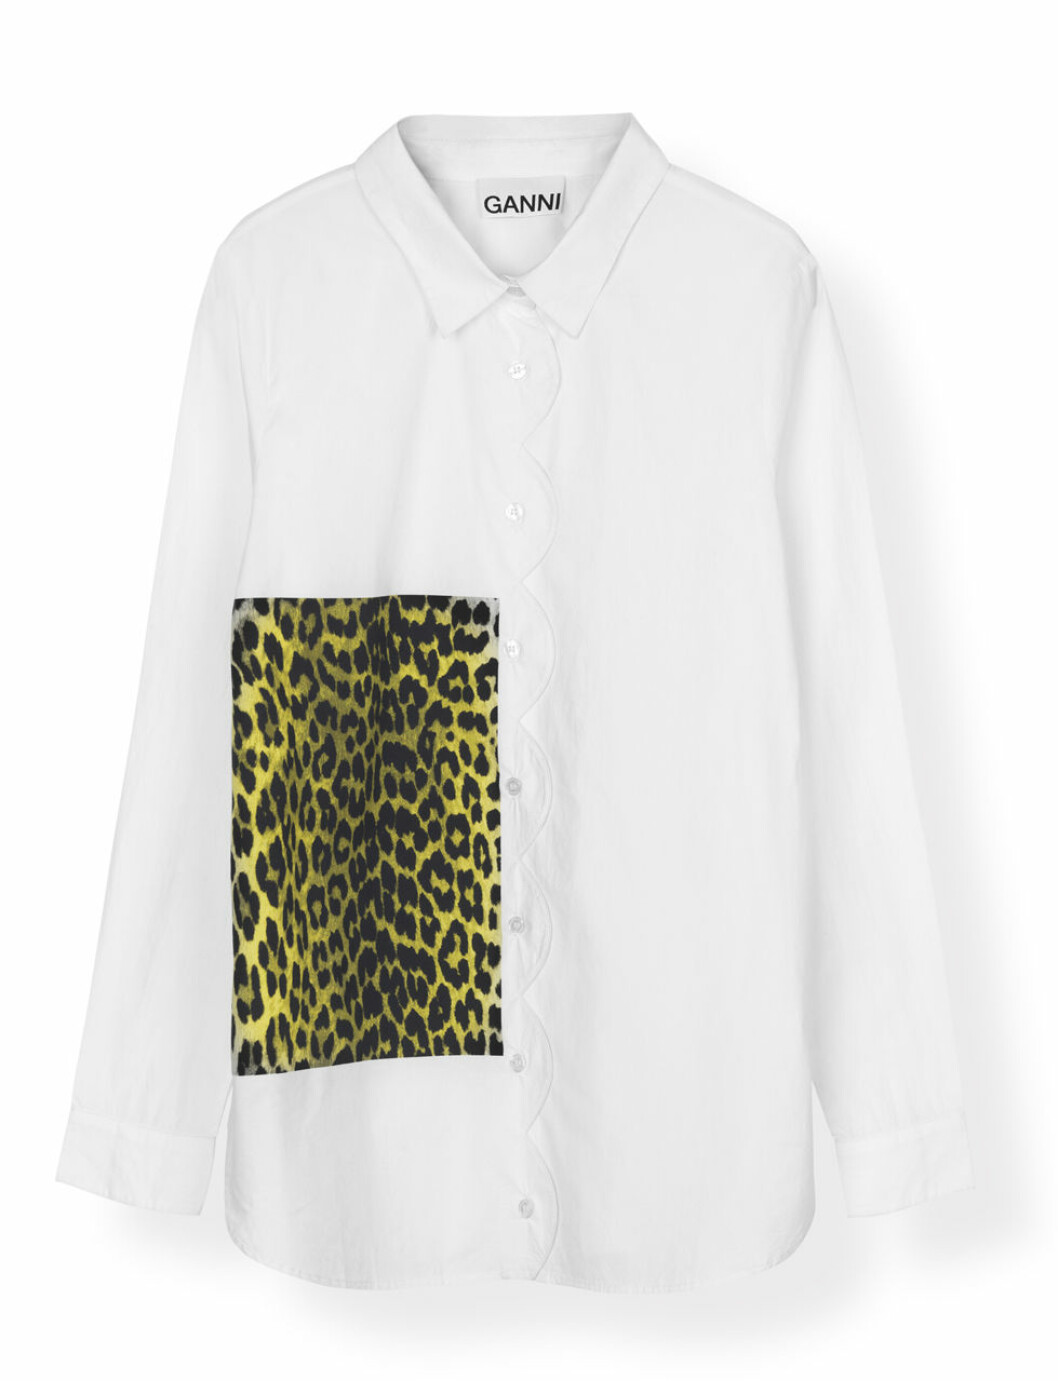 Ganni Stockholm capsule kollektion vit skjorta 